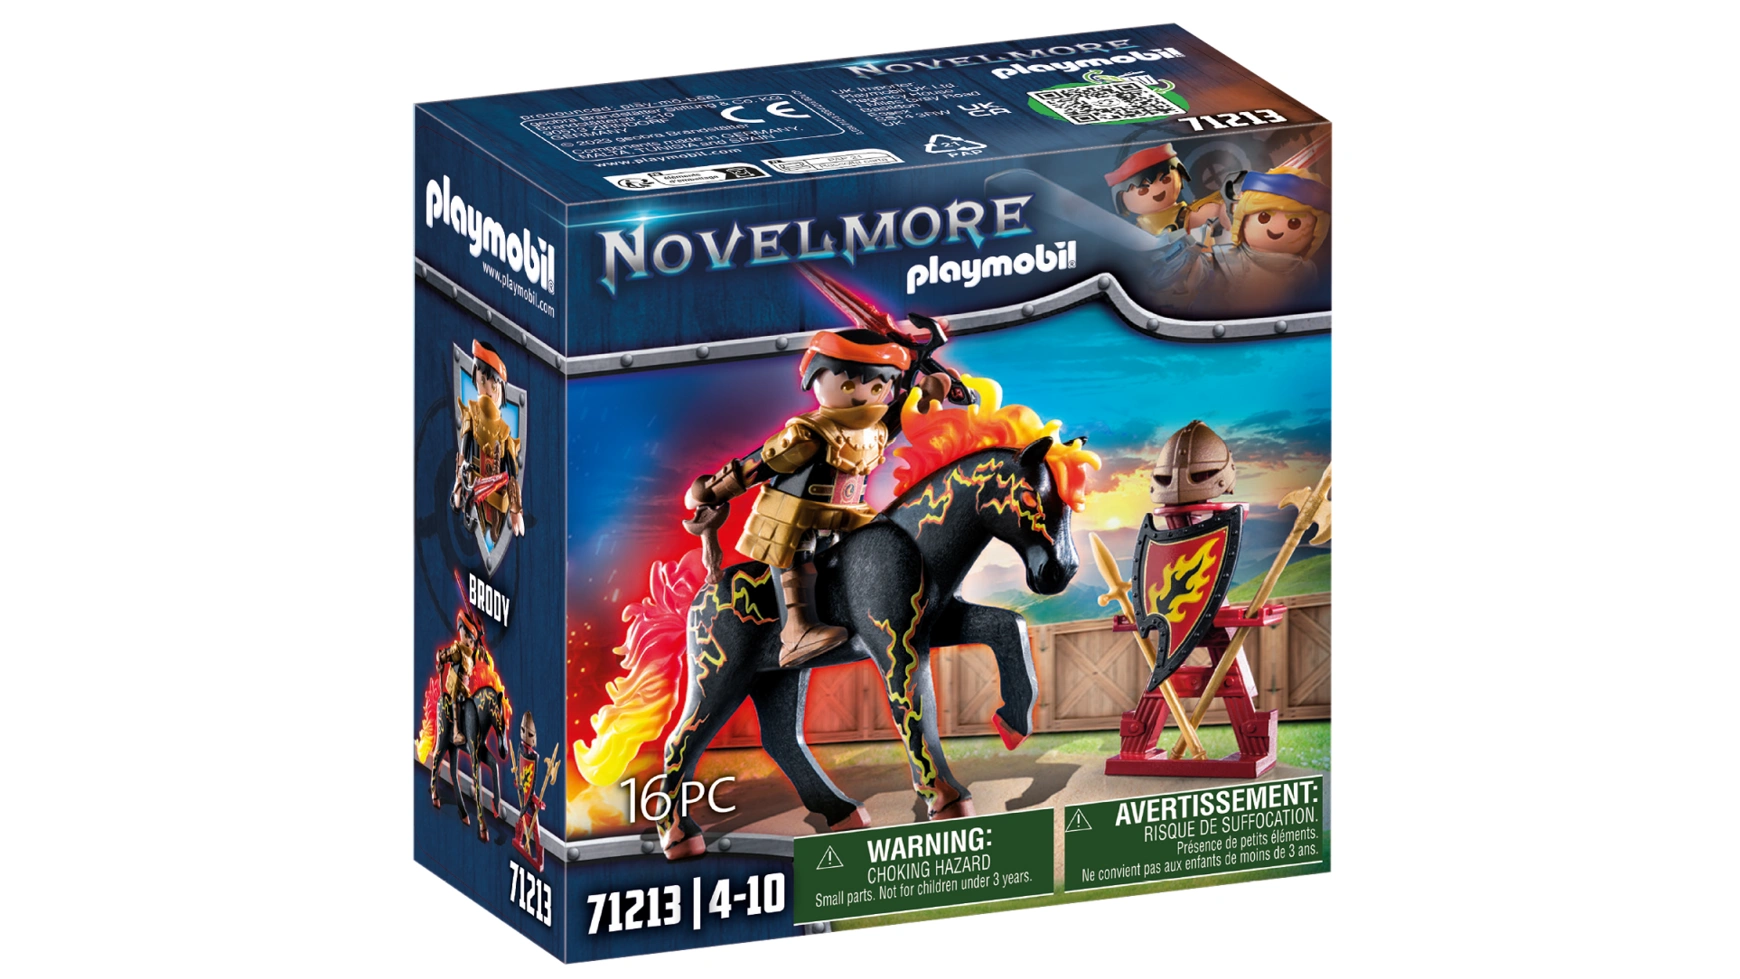 novelmore мои фигурки рыцари новелмора playmobil Novelmore burnham raiders огненные рыцари Playmobil